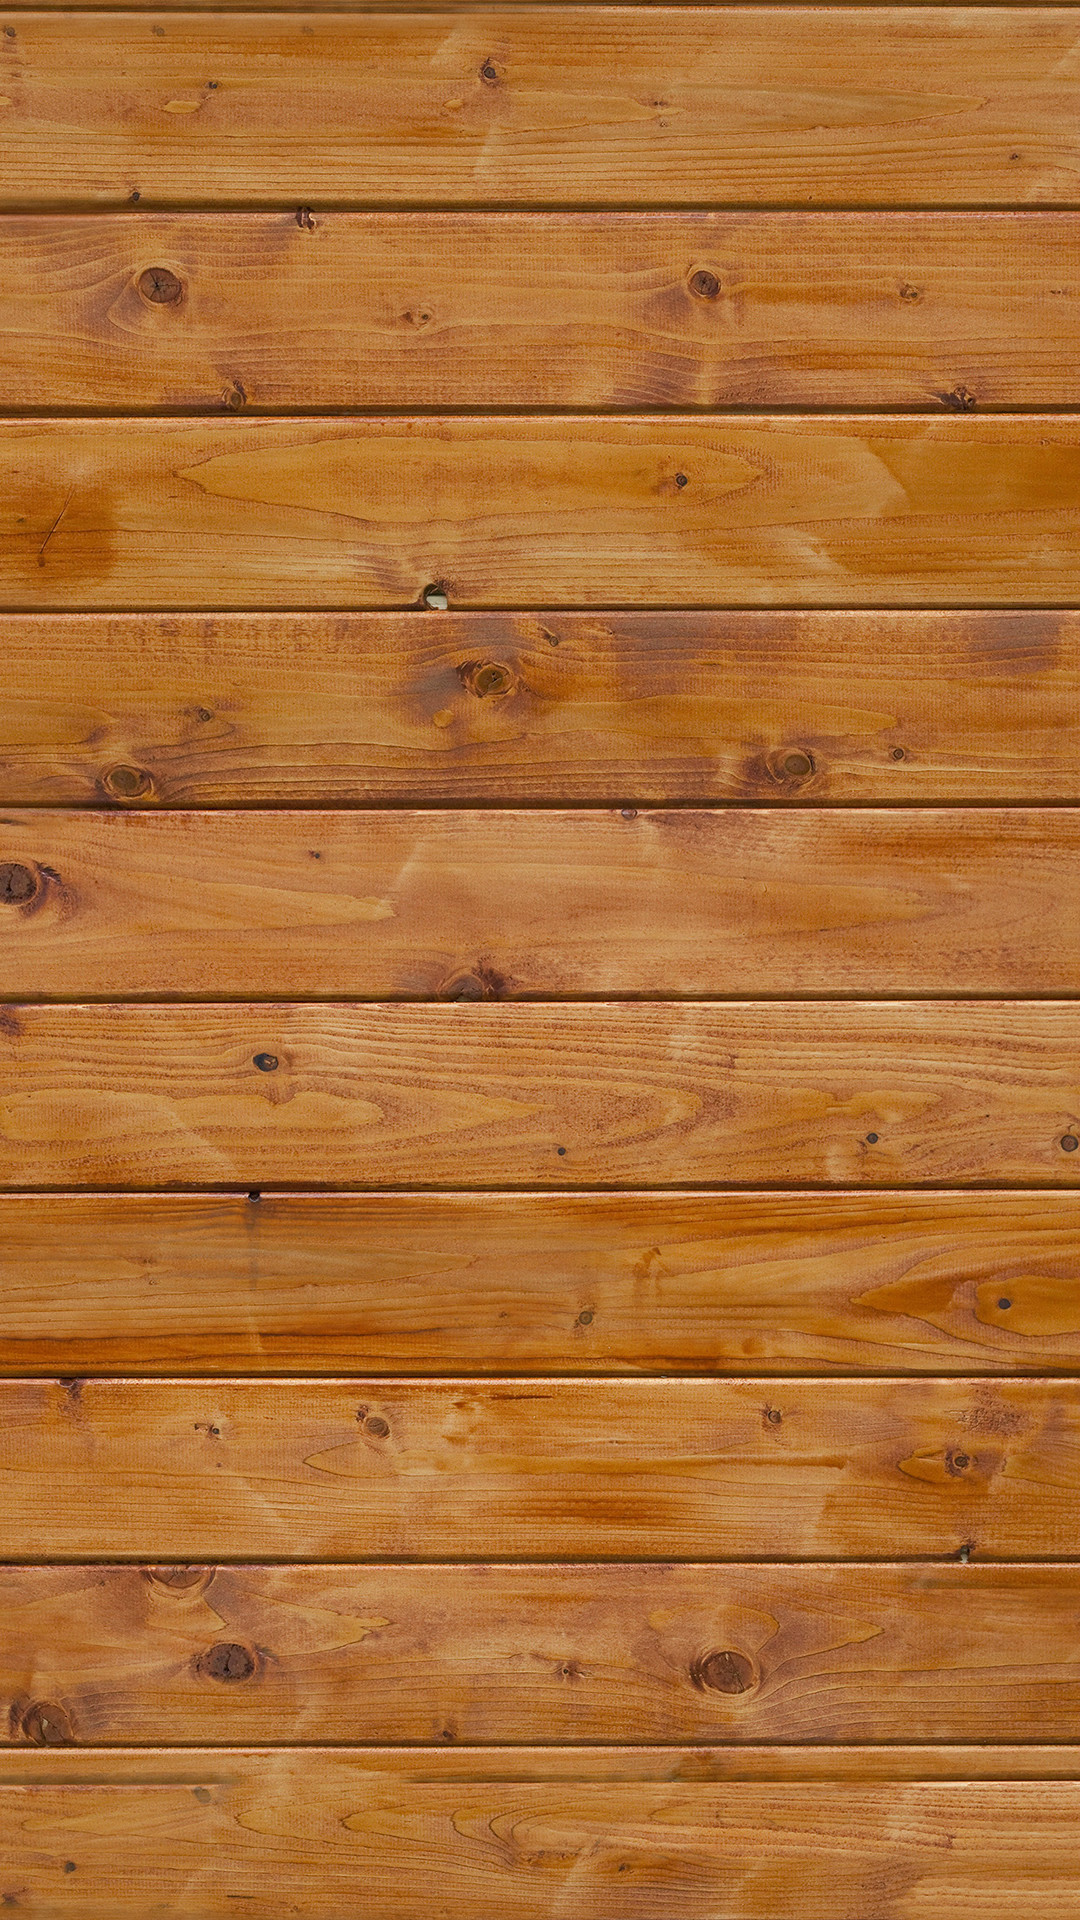 1080x1920 Wood Plank Texture Pattern iPhone 8 wallpaper